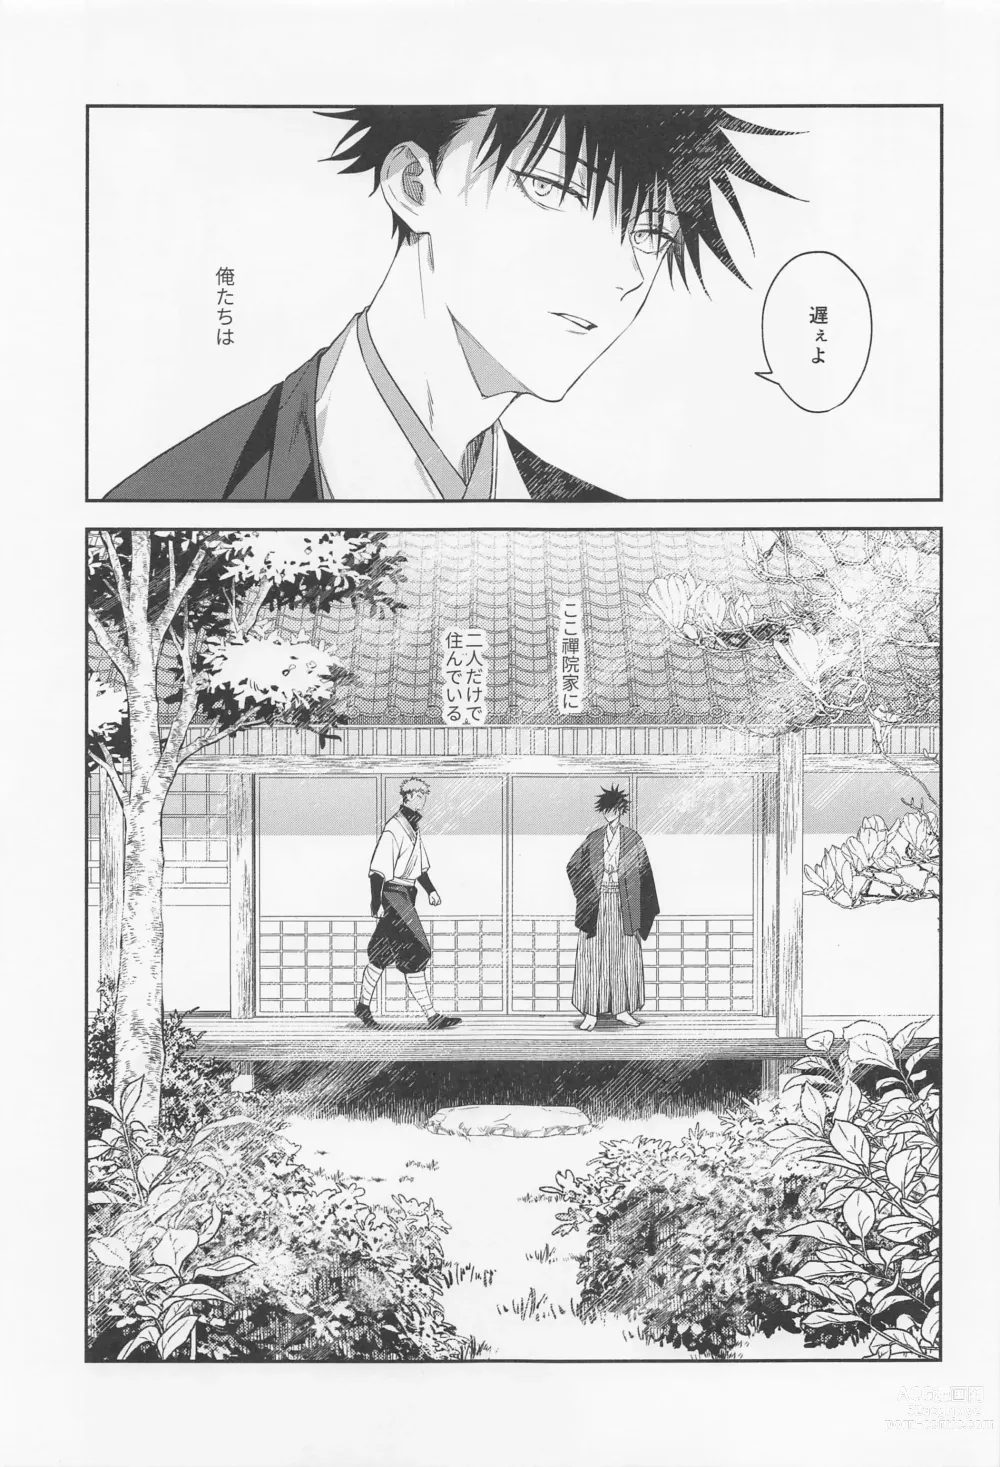 Page 6 of doujinshi Tasuketekure to Itte Kure - I need you to ask for help.